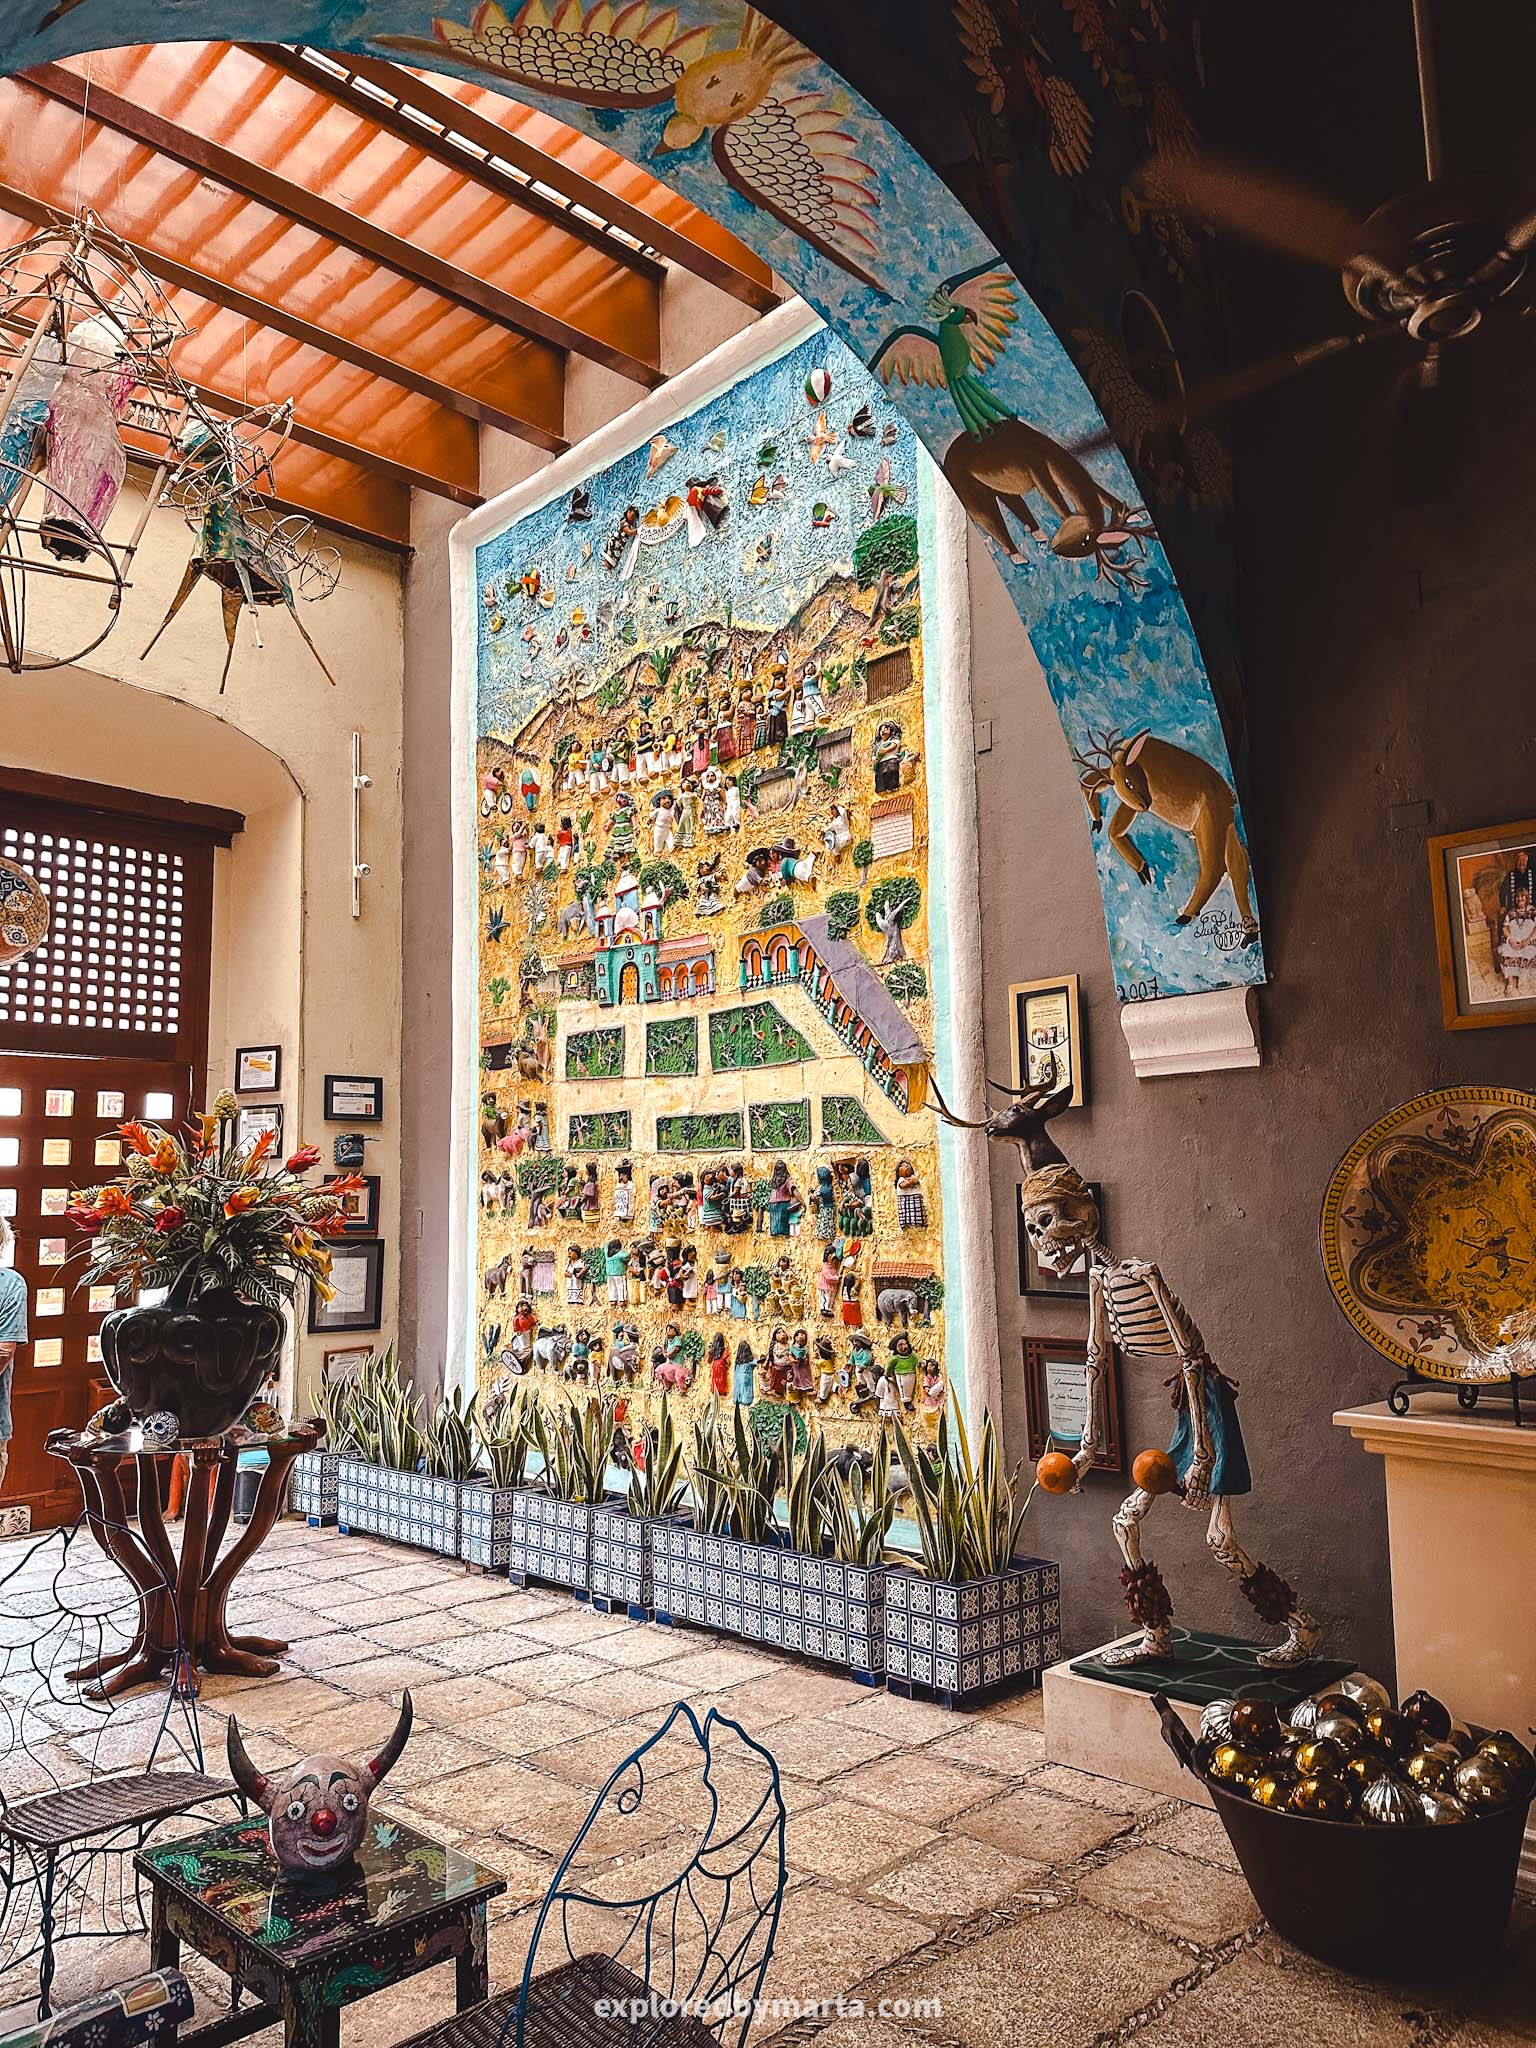 Valladolid, Mexico-Casa de los Venados museum in a private home in Valladolid featuring Mexical folk art objects